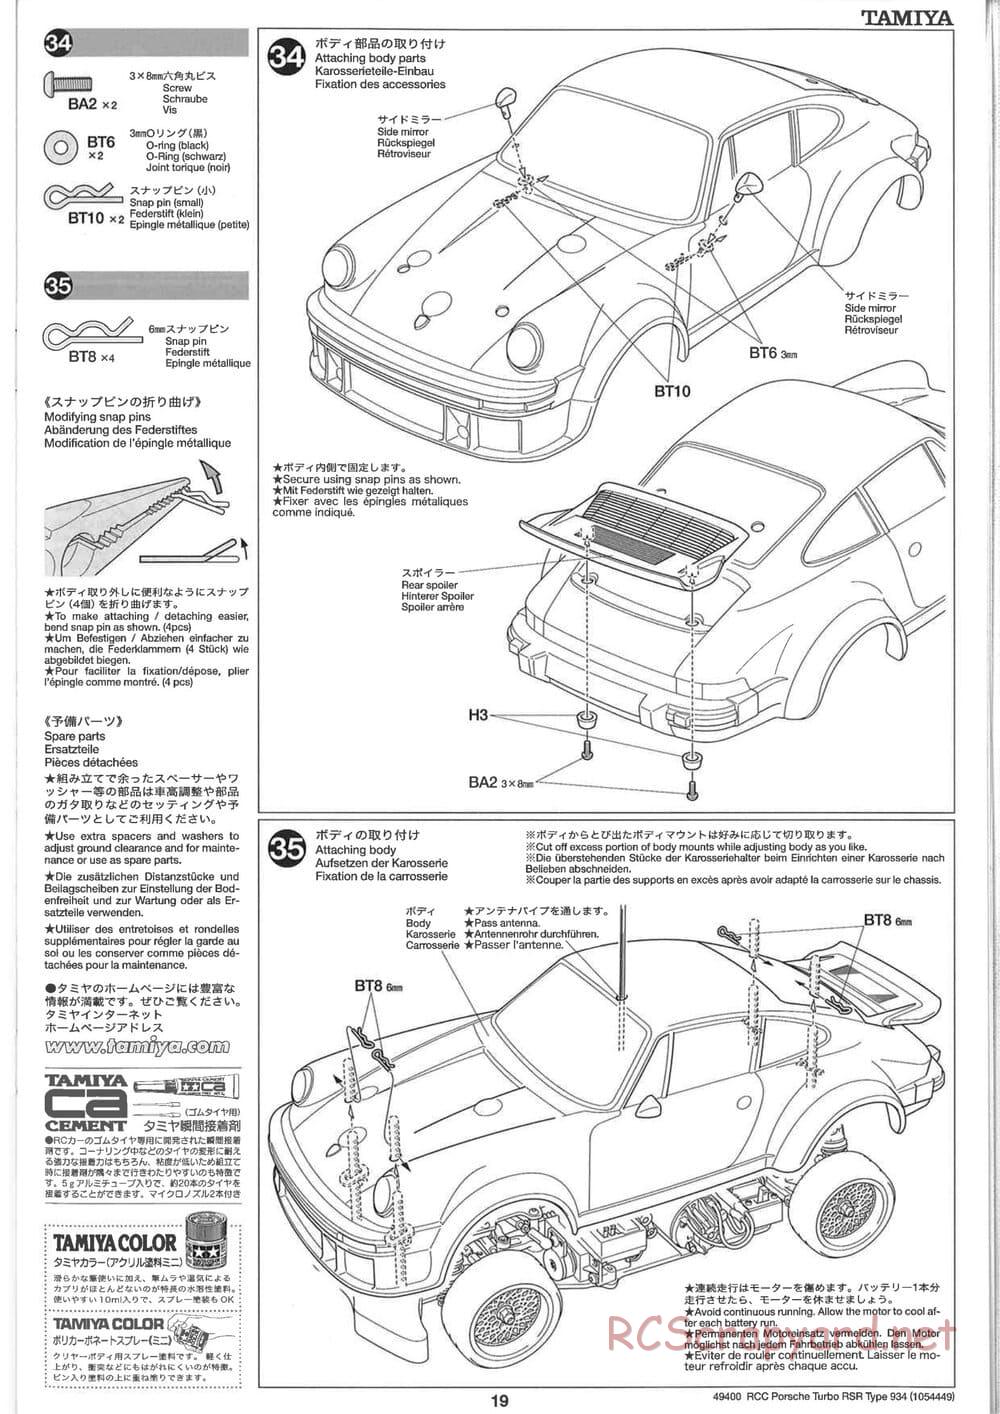 Tamiya - Porsche Turbo RSR Type 934 - TA05 Chassis - Manual - Page 19